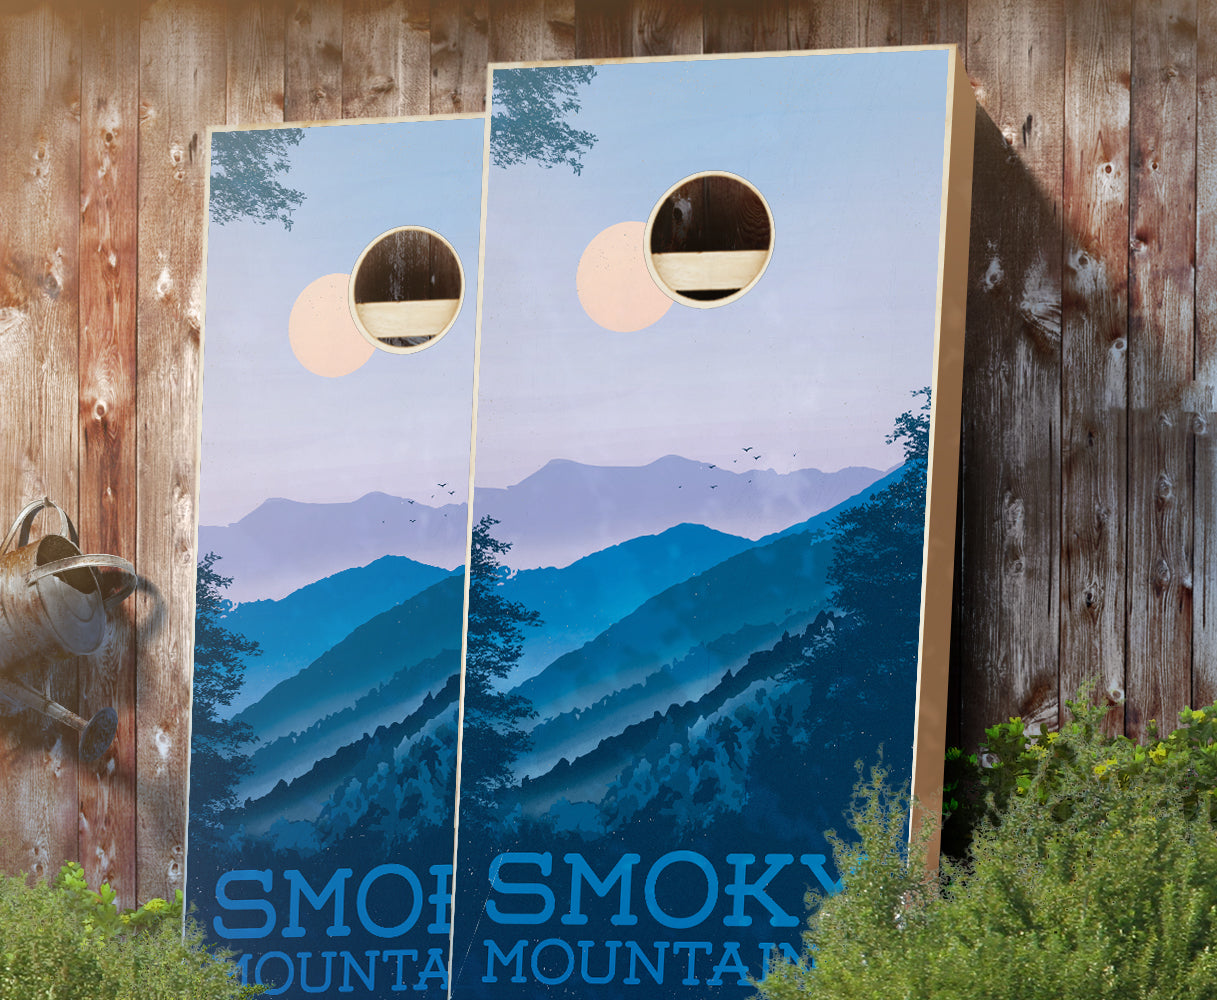 "Smoky Mountains" National Park Cornhole Boards